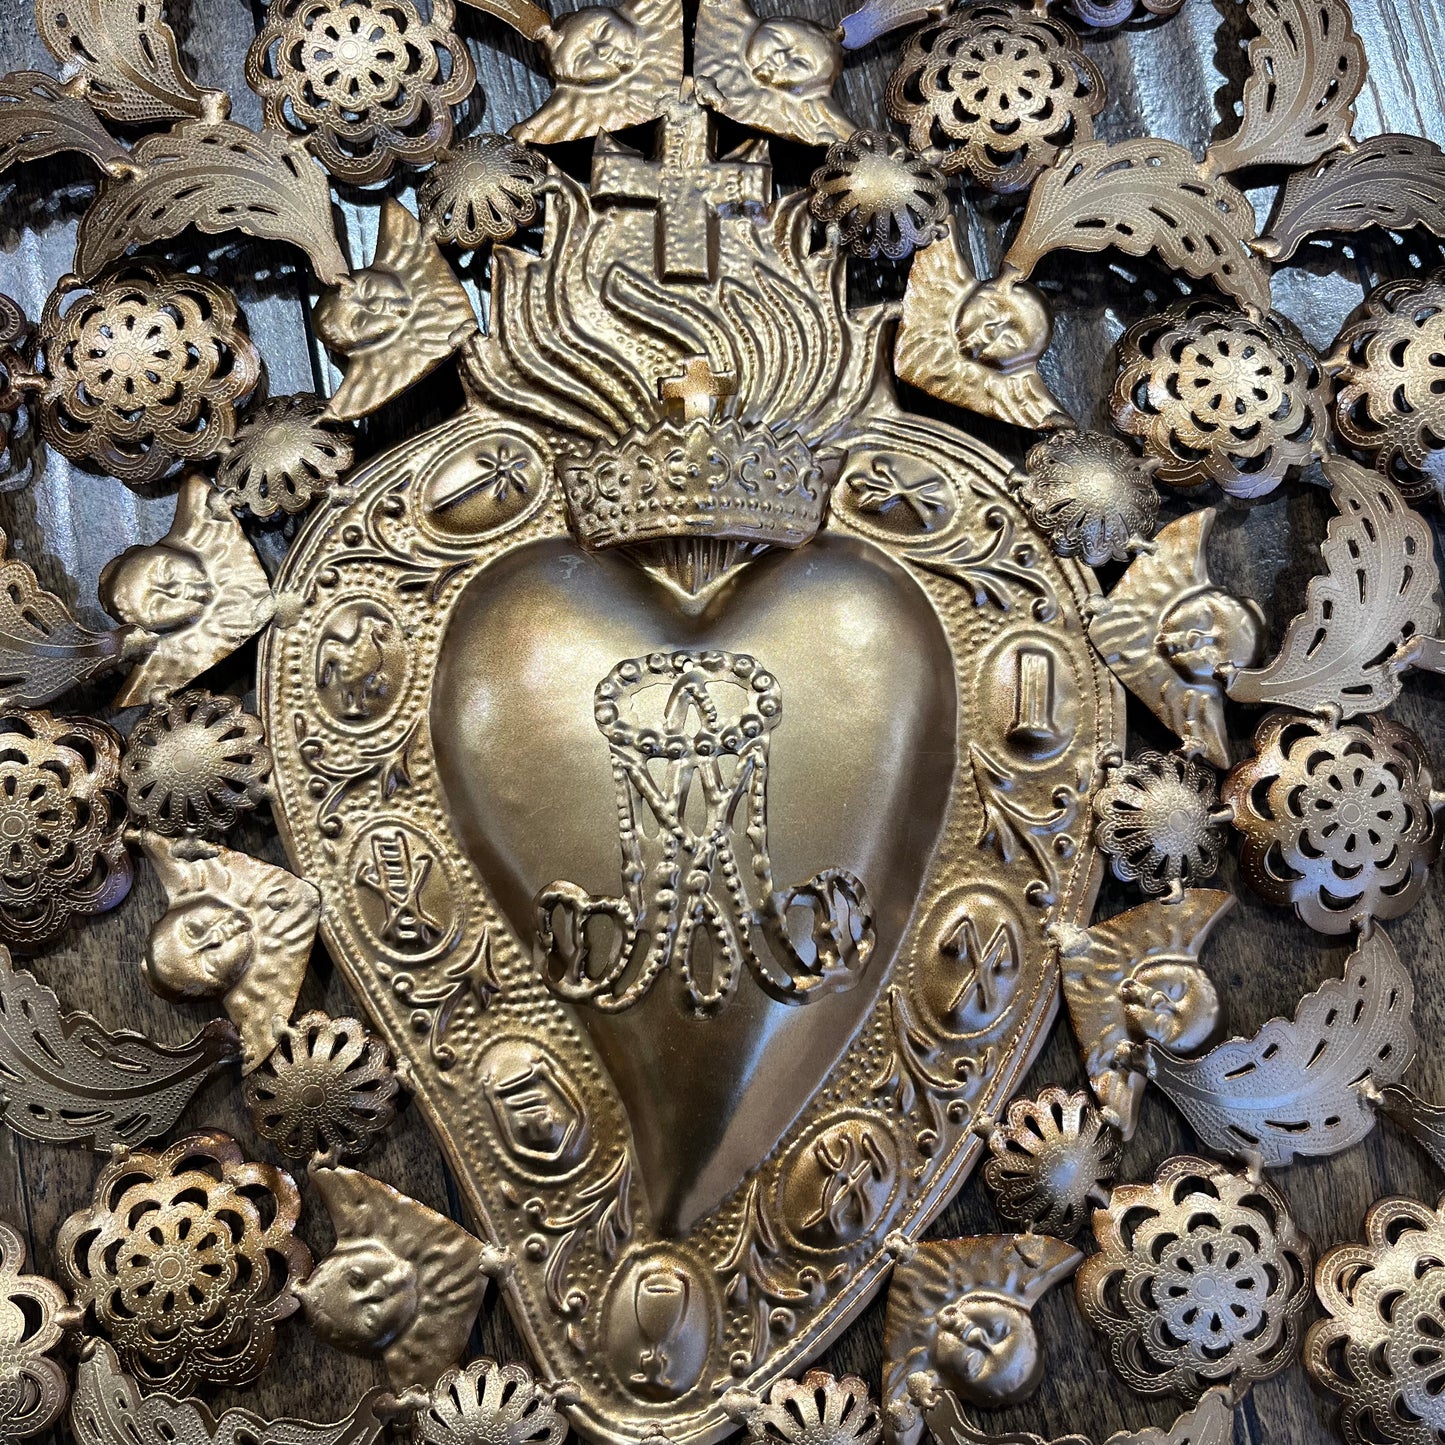 Cutout Sacred Heart Ornament